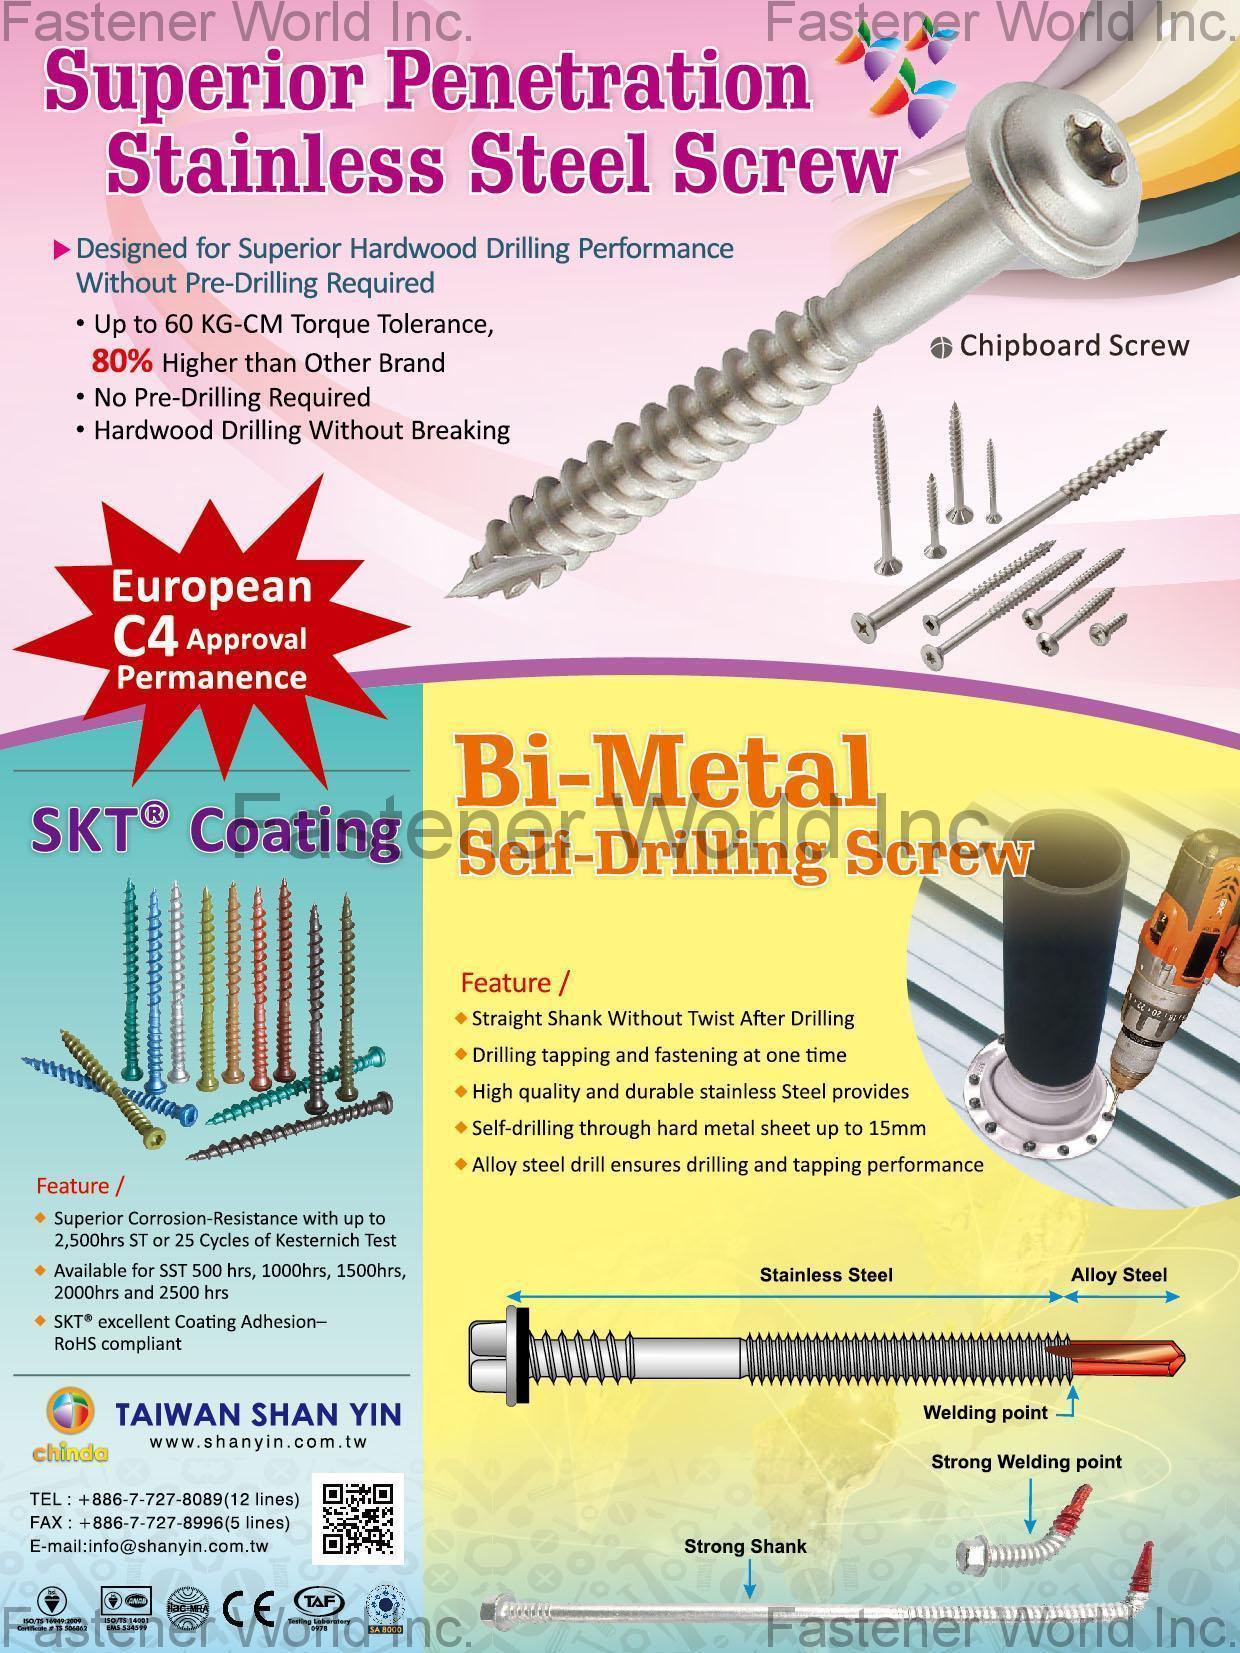 TAIWAN SHAN YIN INTERNATIONAL CO., LTD.  , Stainless Steel Screws, Bi-metal Self-drilling Screws, SKT Coating , Bi-metal Self-drilling Screws